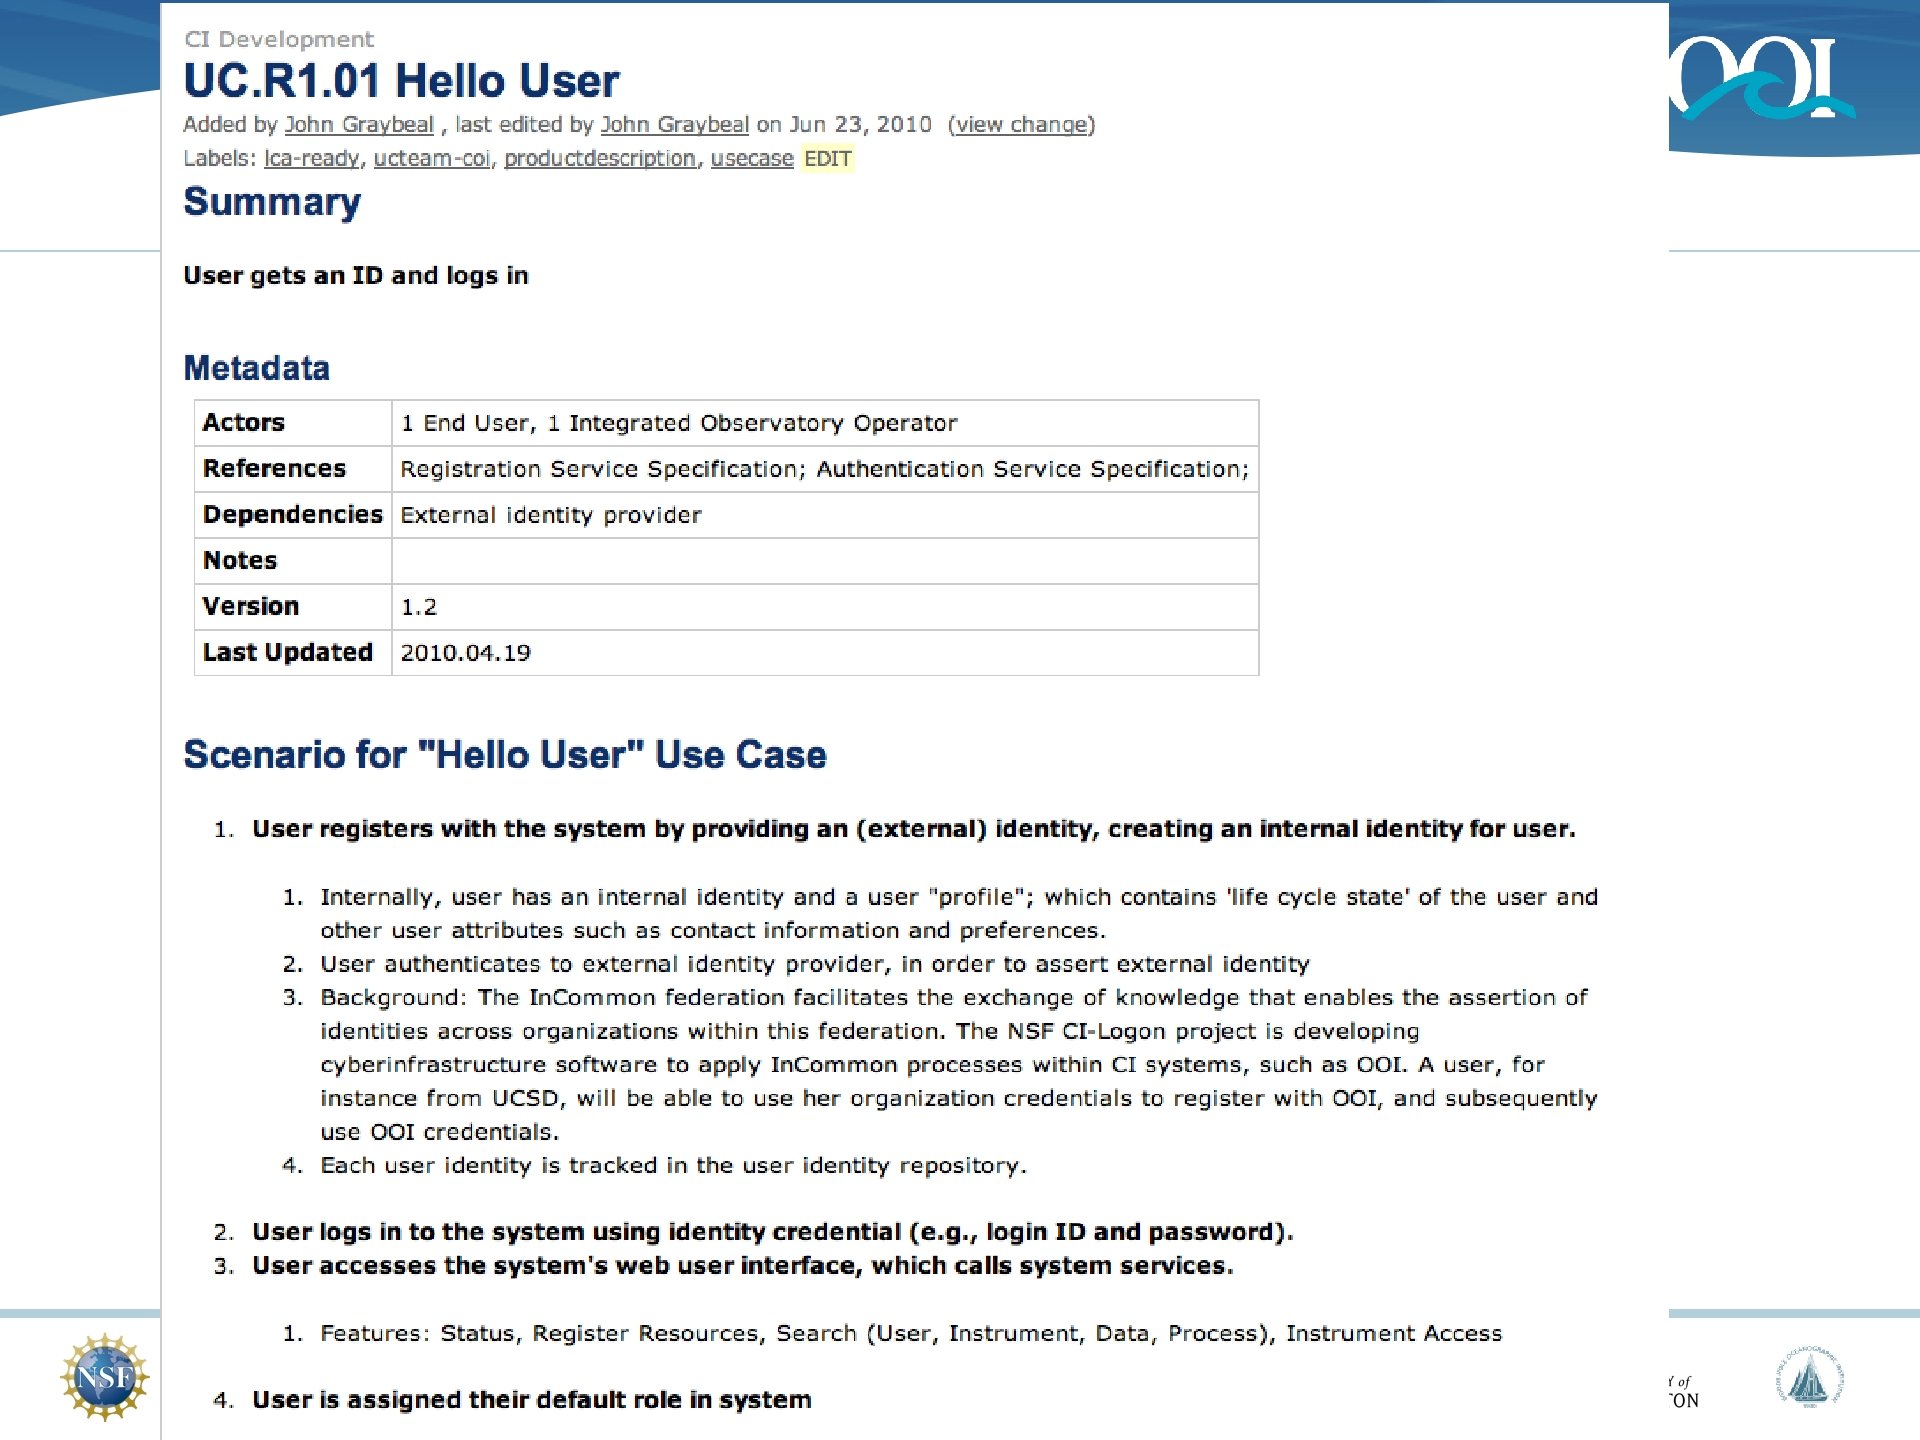 EOI User Review June 16 2011 